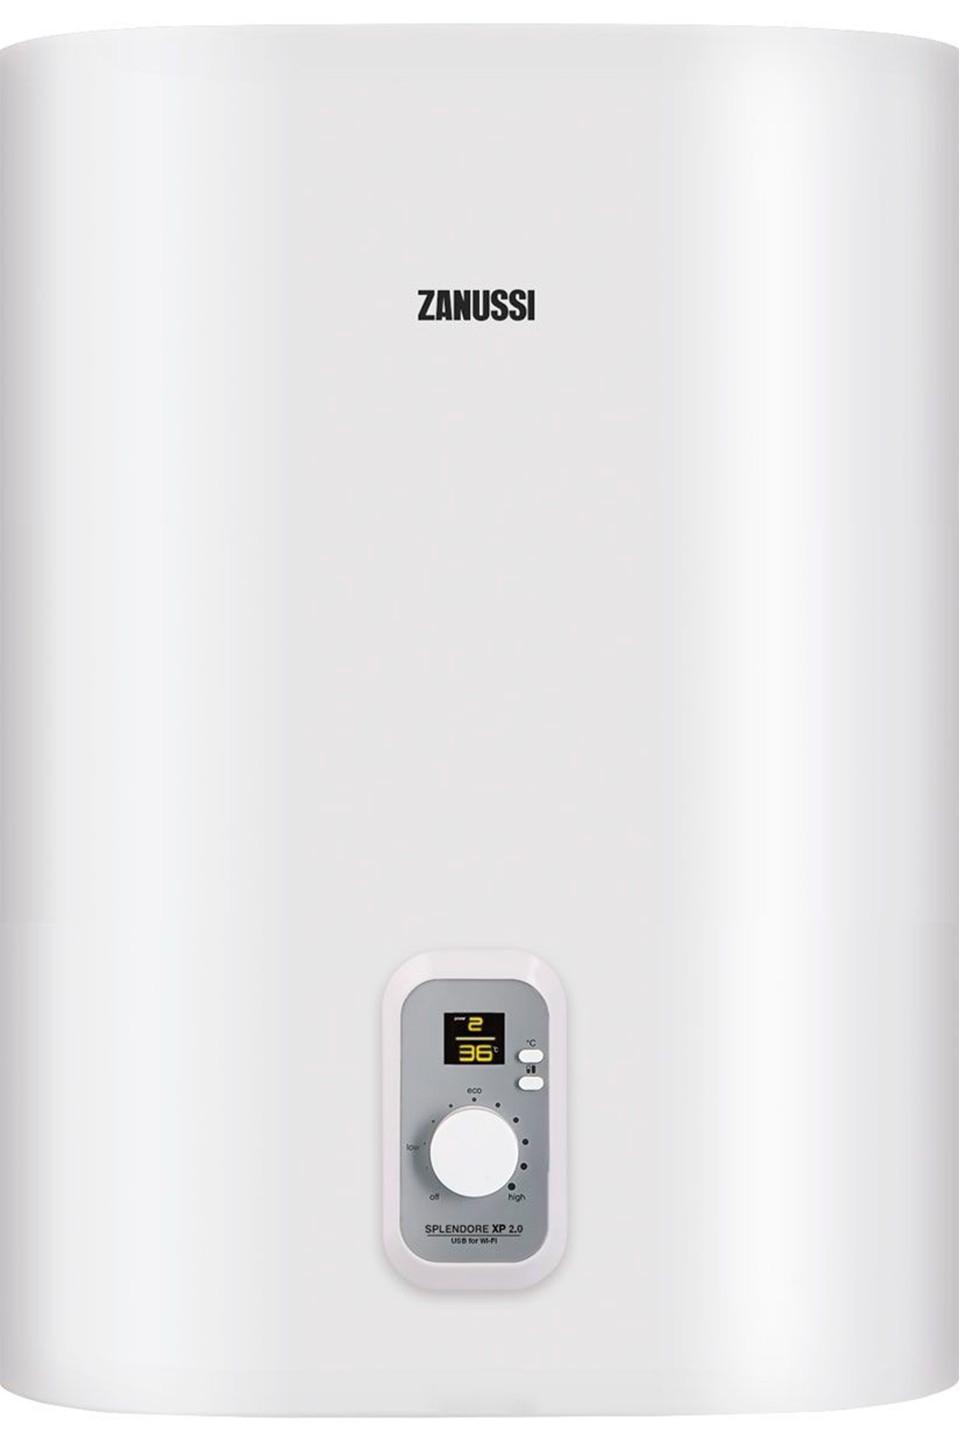 Бойлер Zanussi ZWH/S 50 Splendore XP 2.0 в интернет-магазине, главное фото